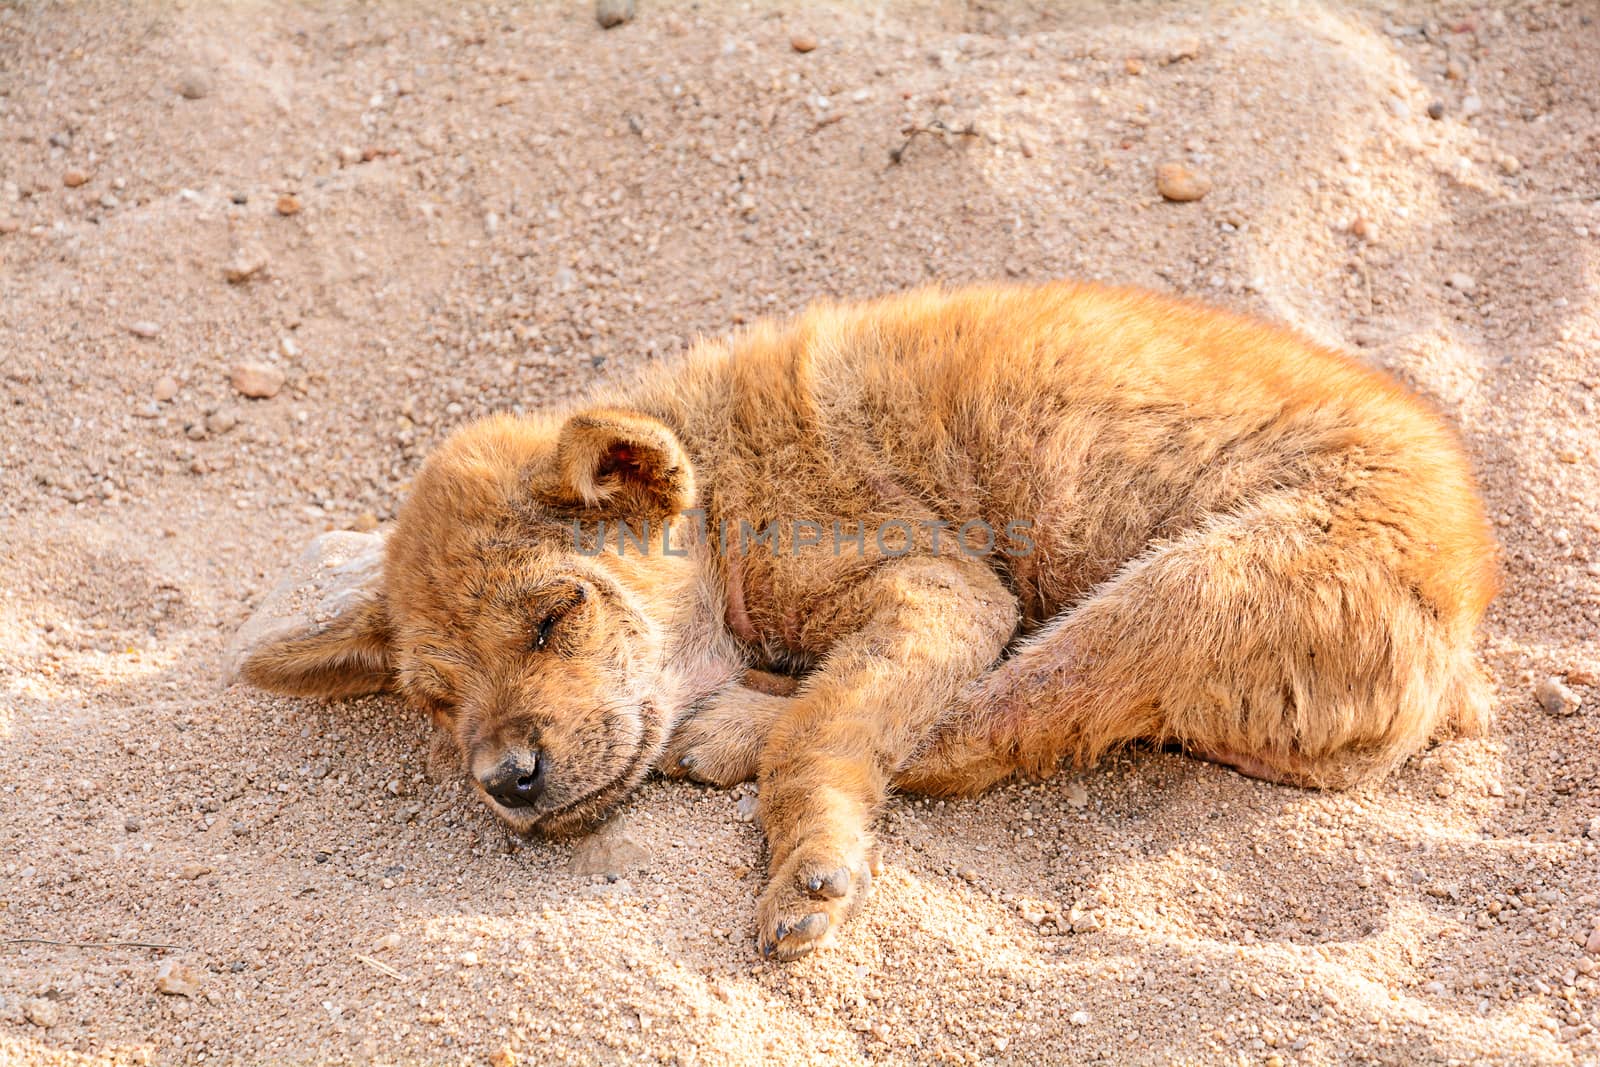 Puppy sleeping on the sand. 